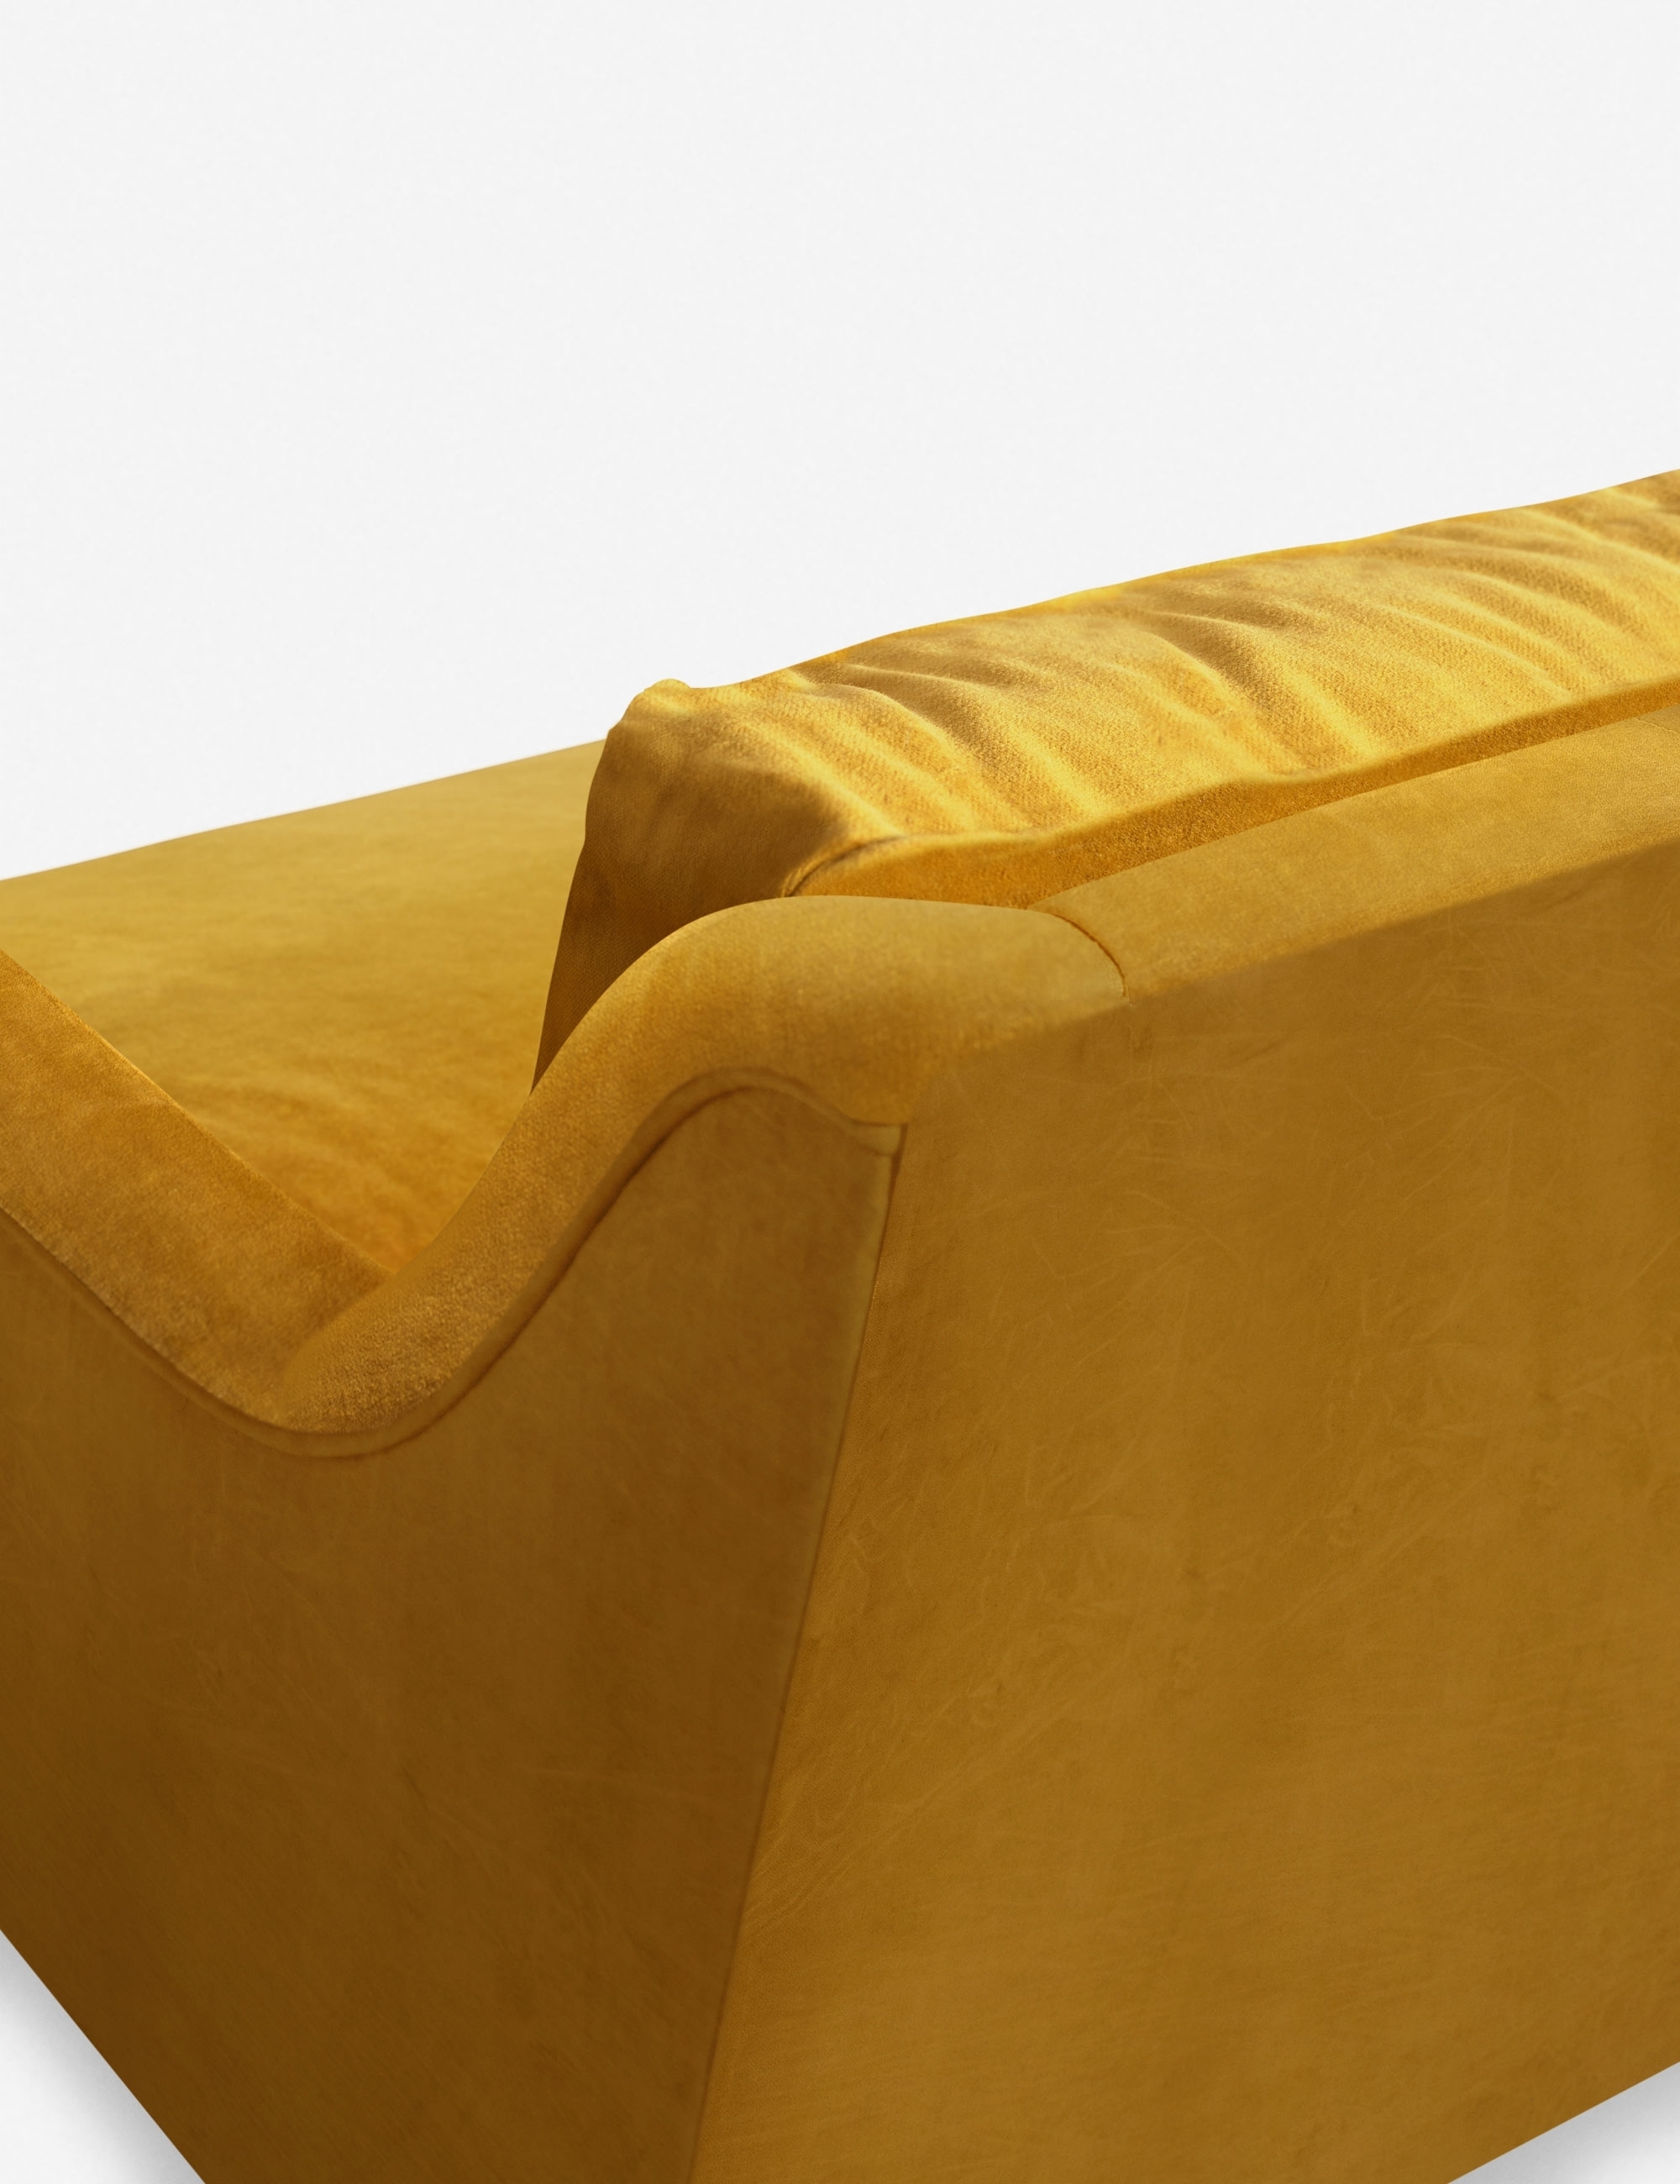 Rivington Sofa by Ginny Macdonald - Image 5